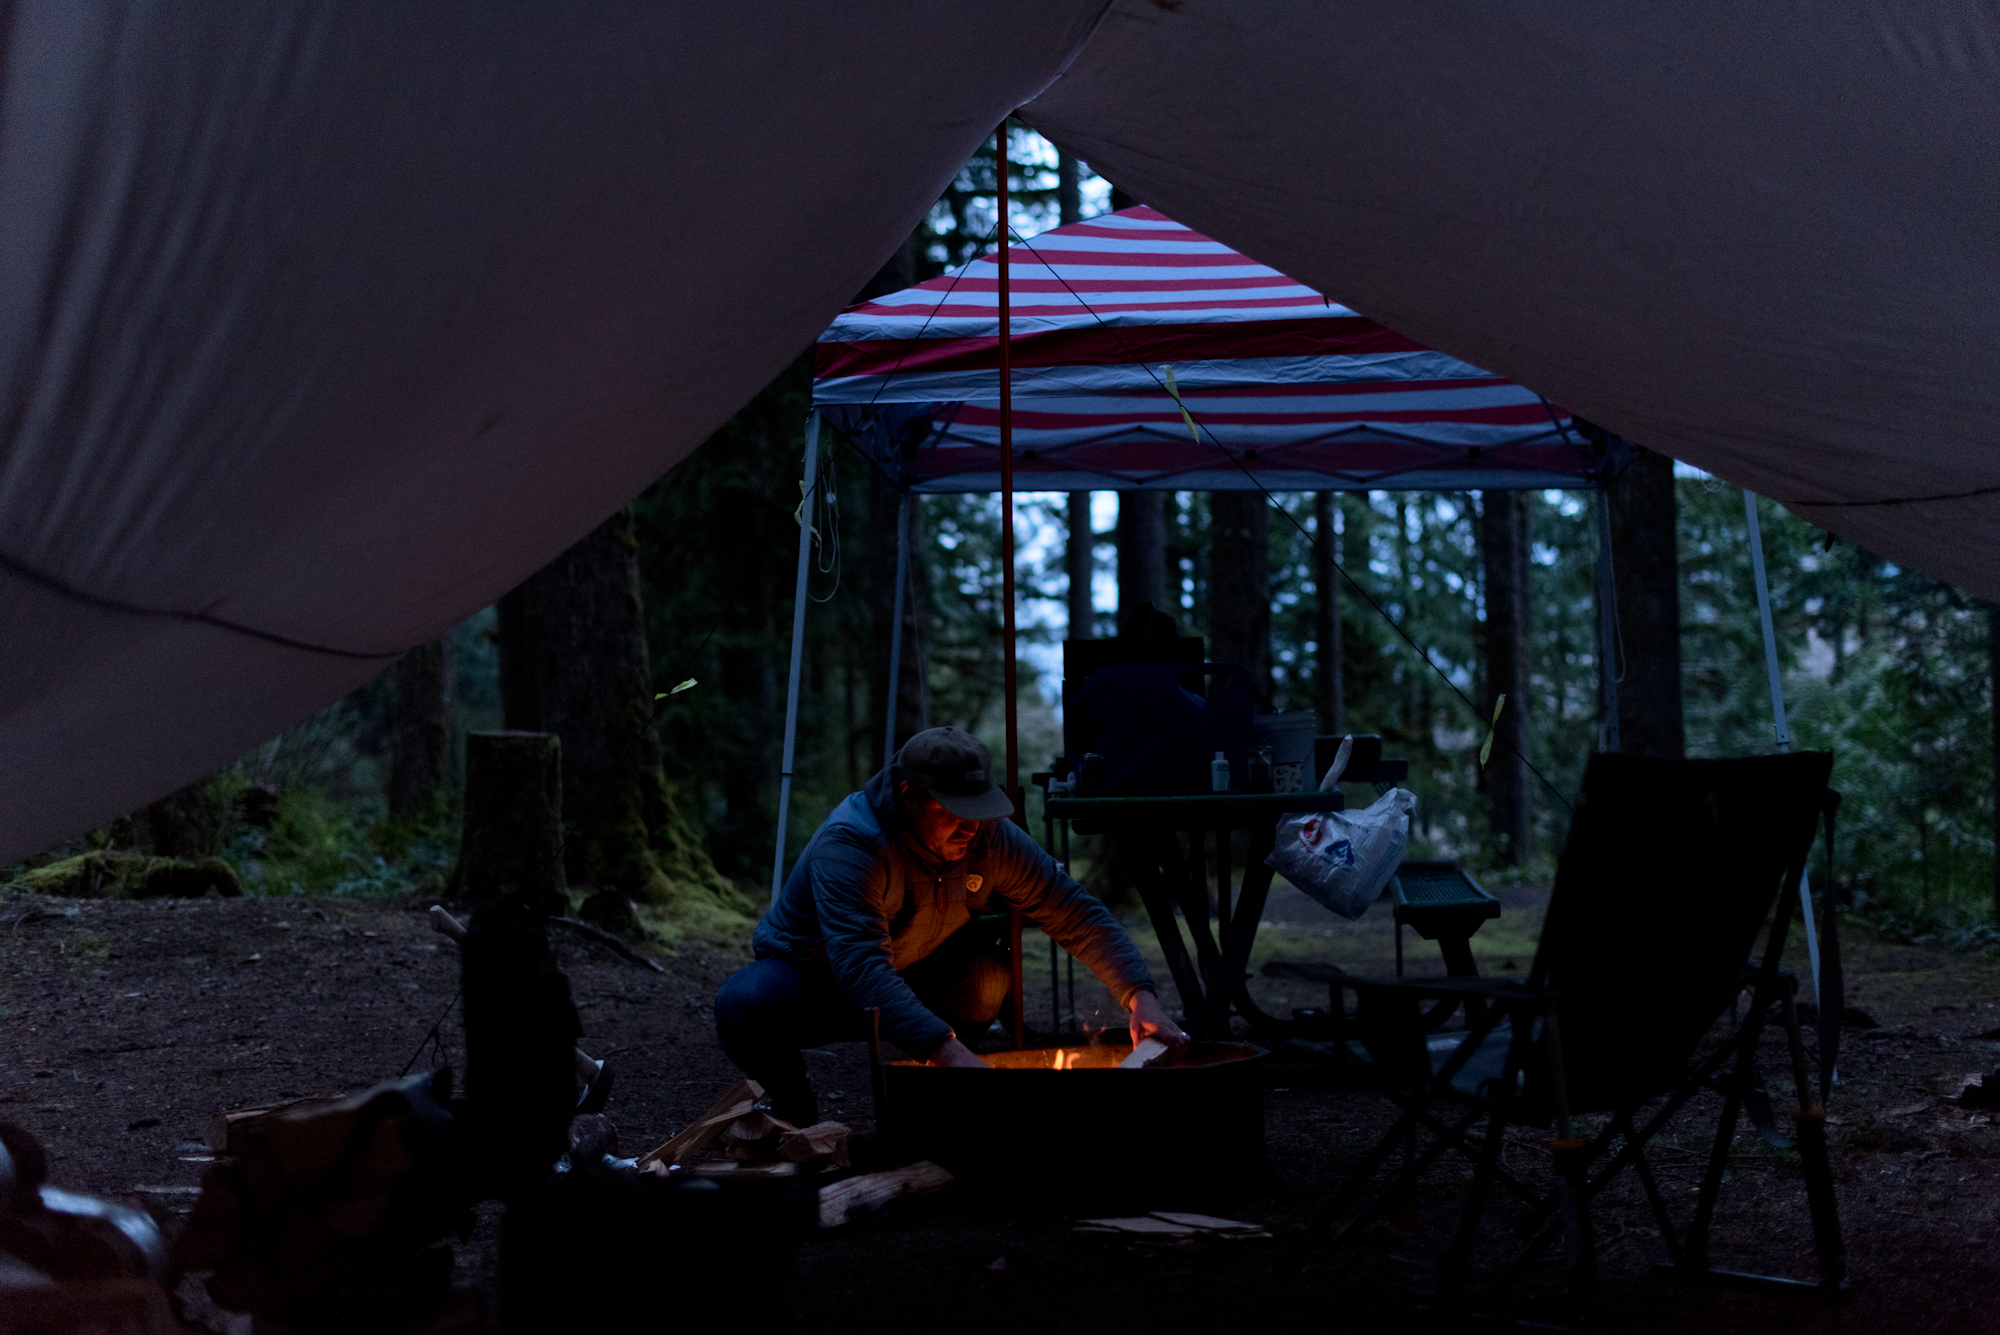 A low light photograph of a man tending to a campfire.